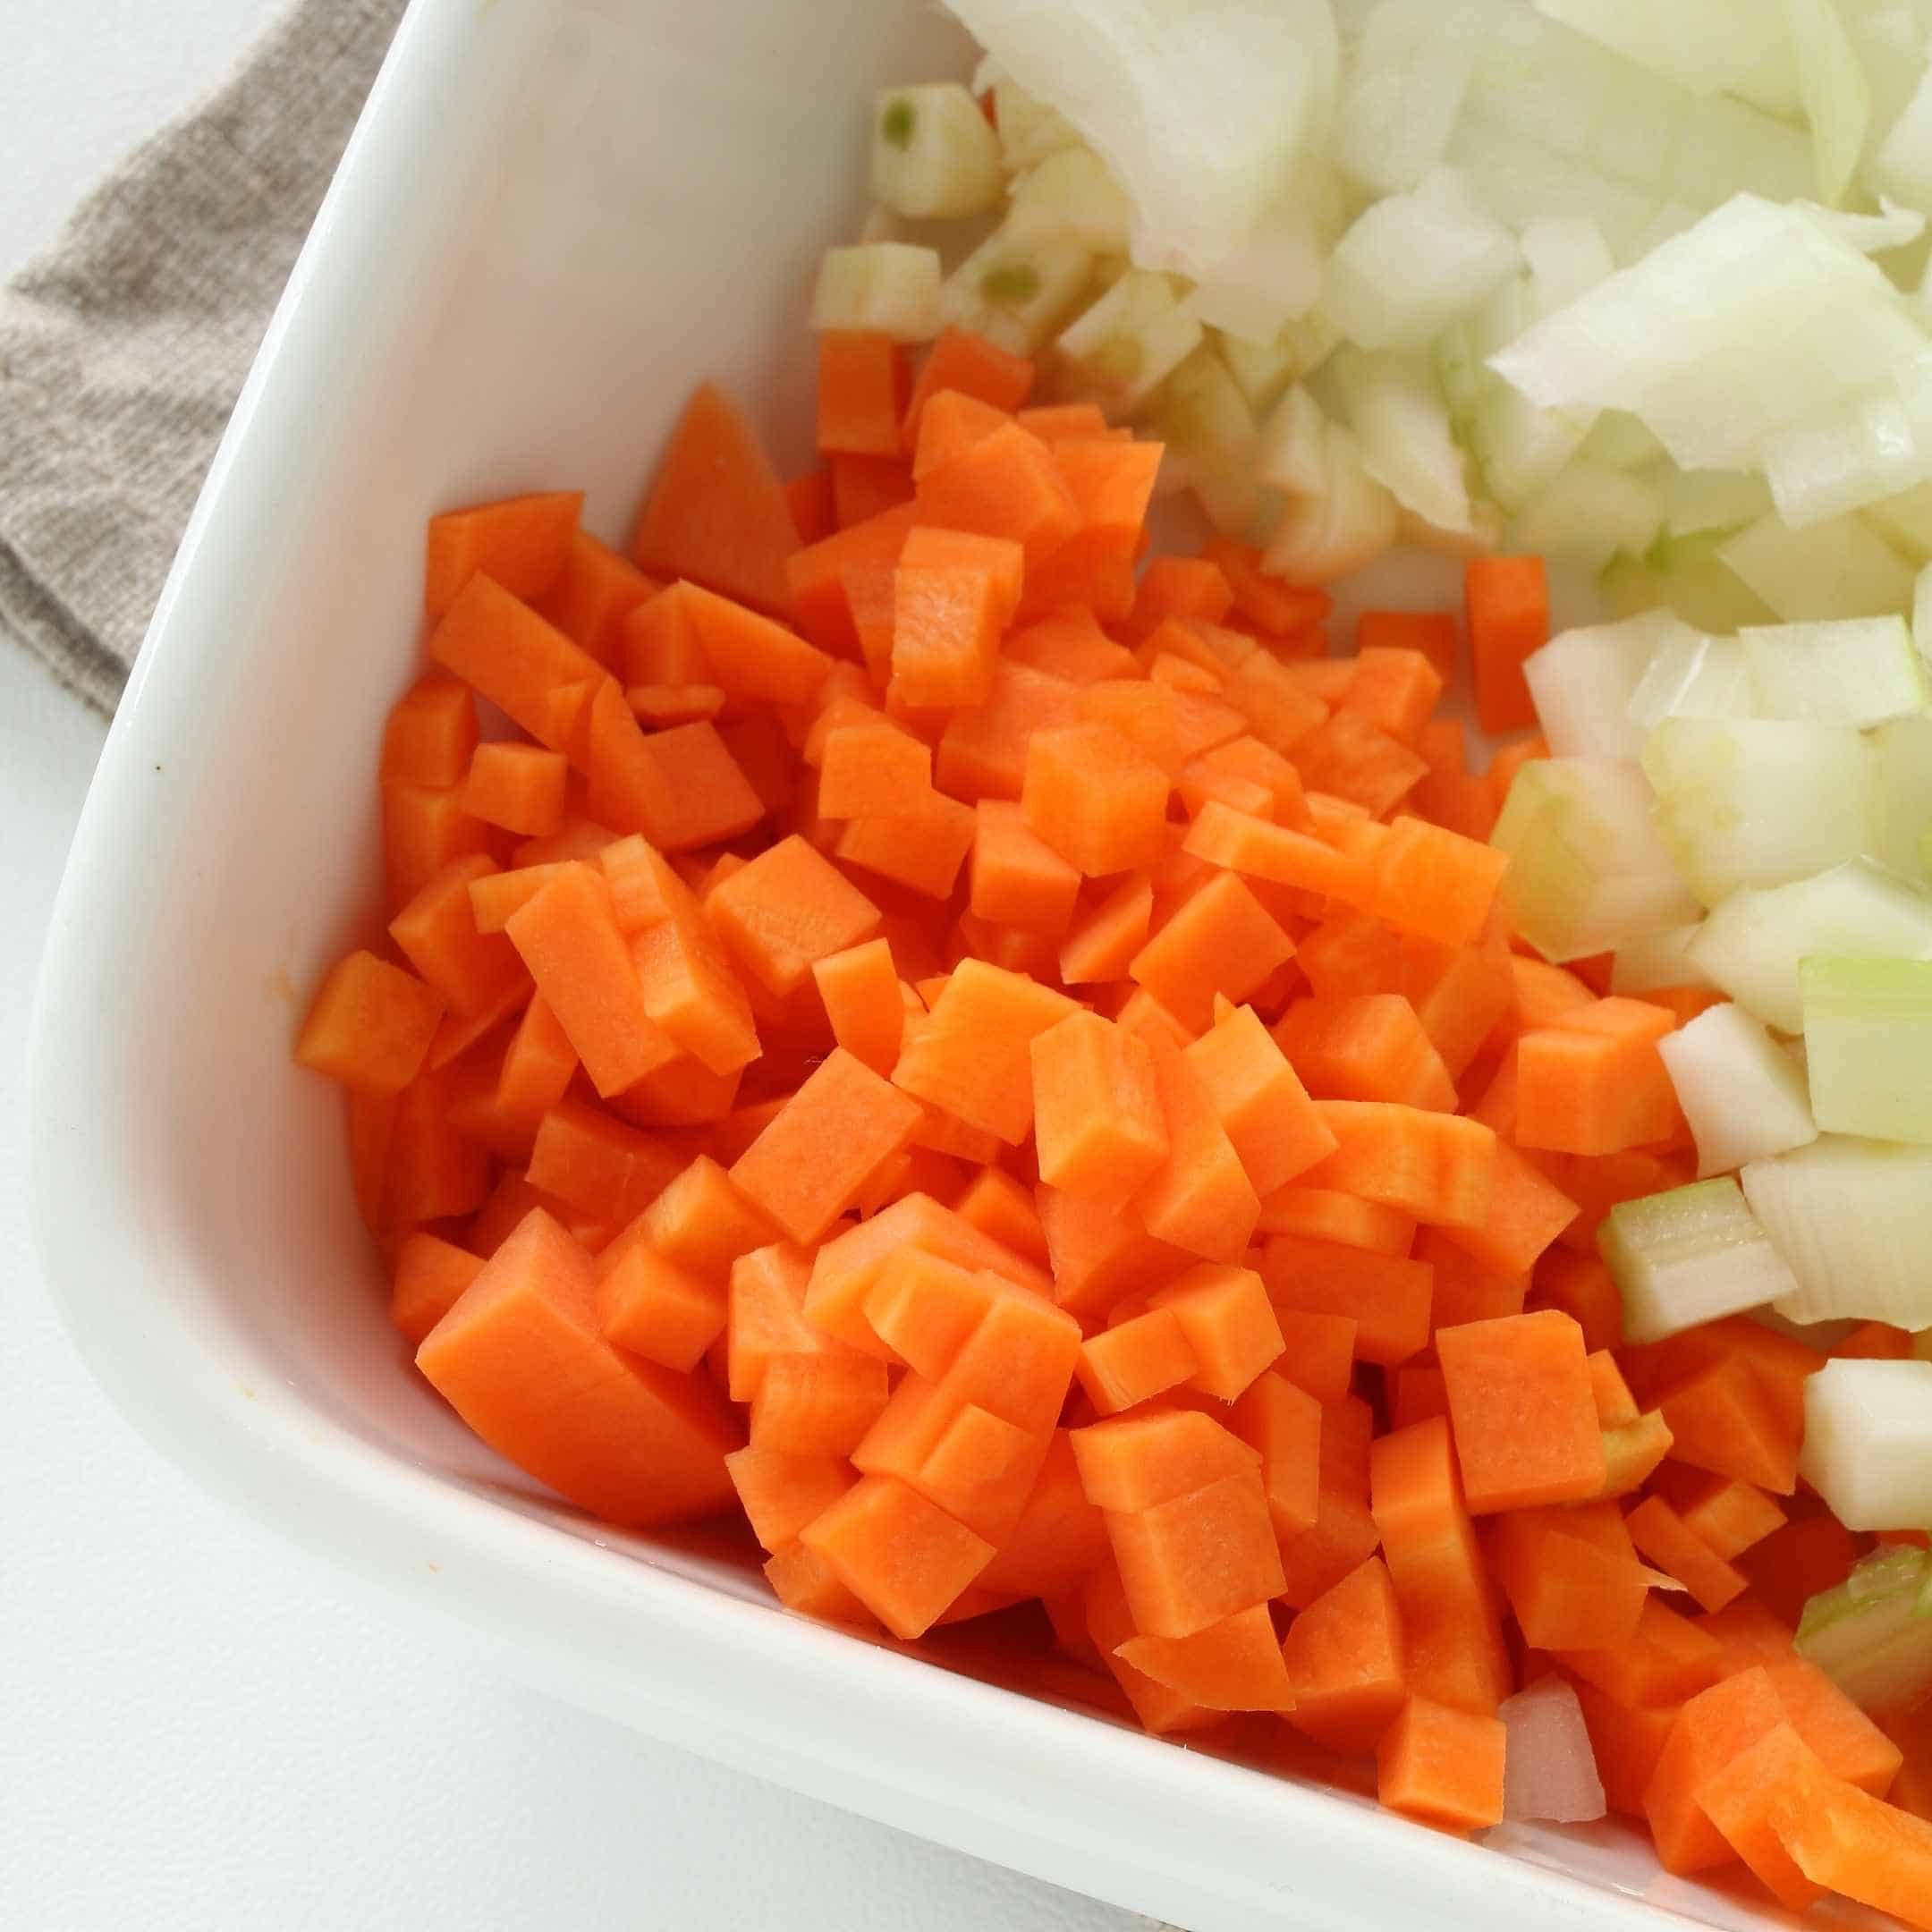 cut carrots and onions